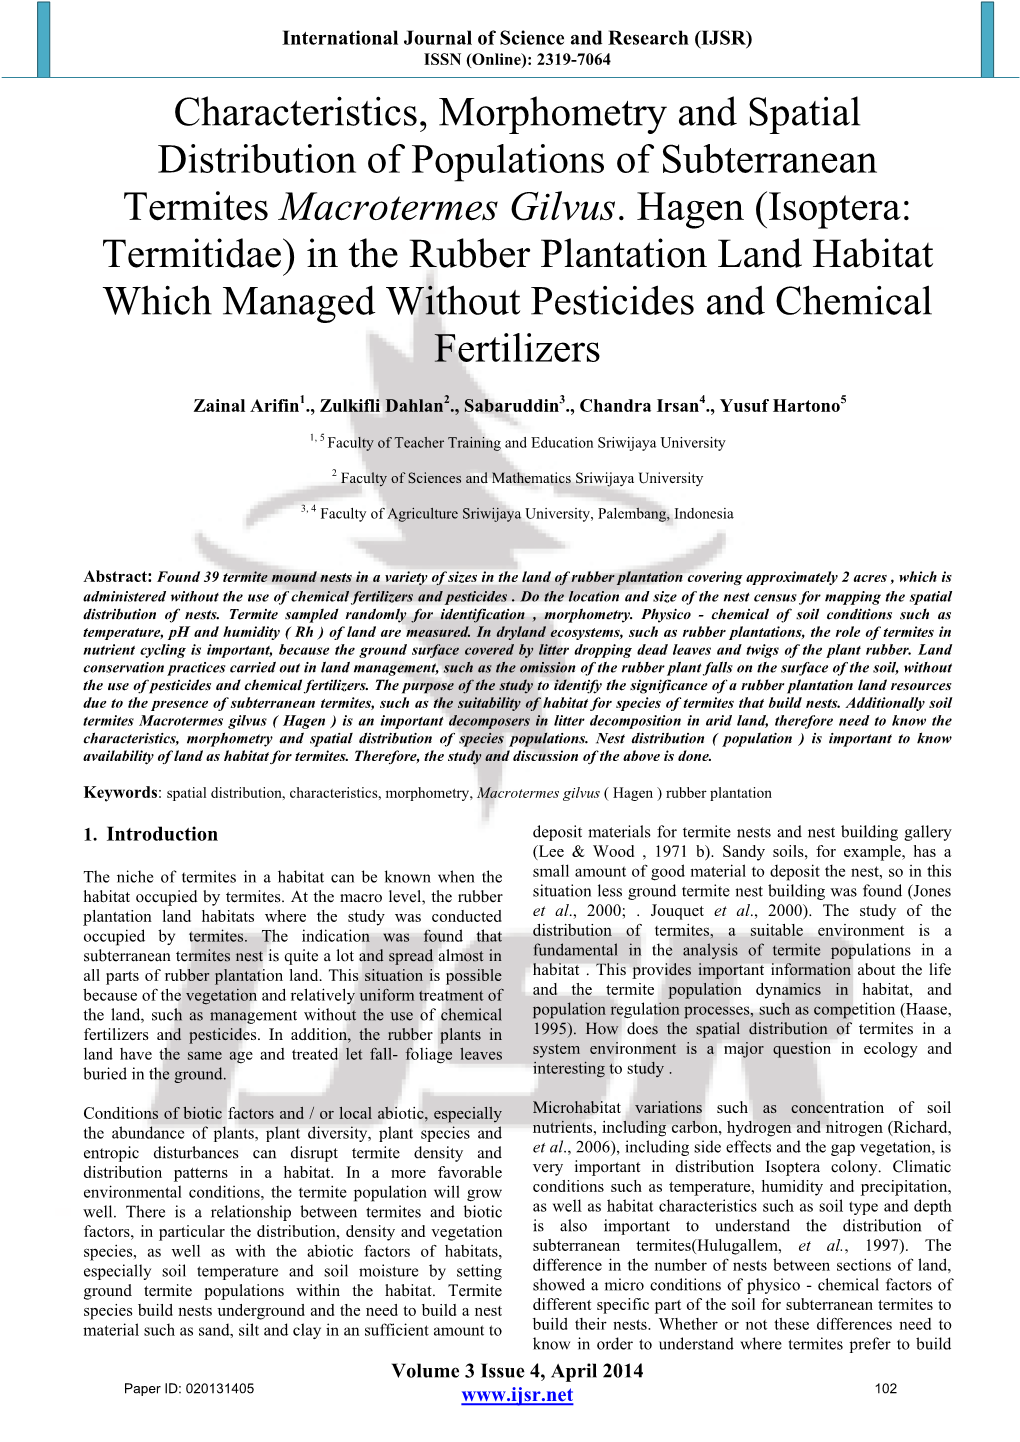 Characteristics, Morphometry and Spatial Distribution of Populations of Subterranean Termites Macrotermes Gilvus